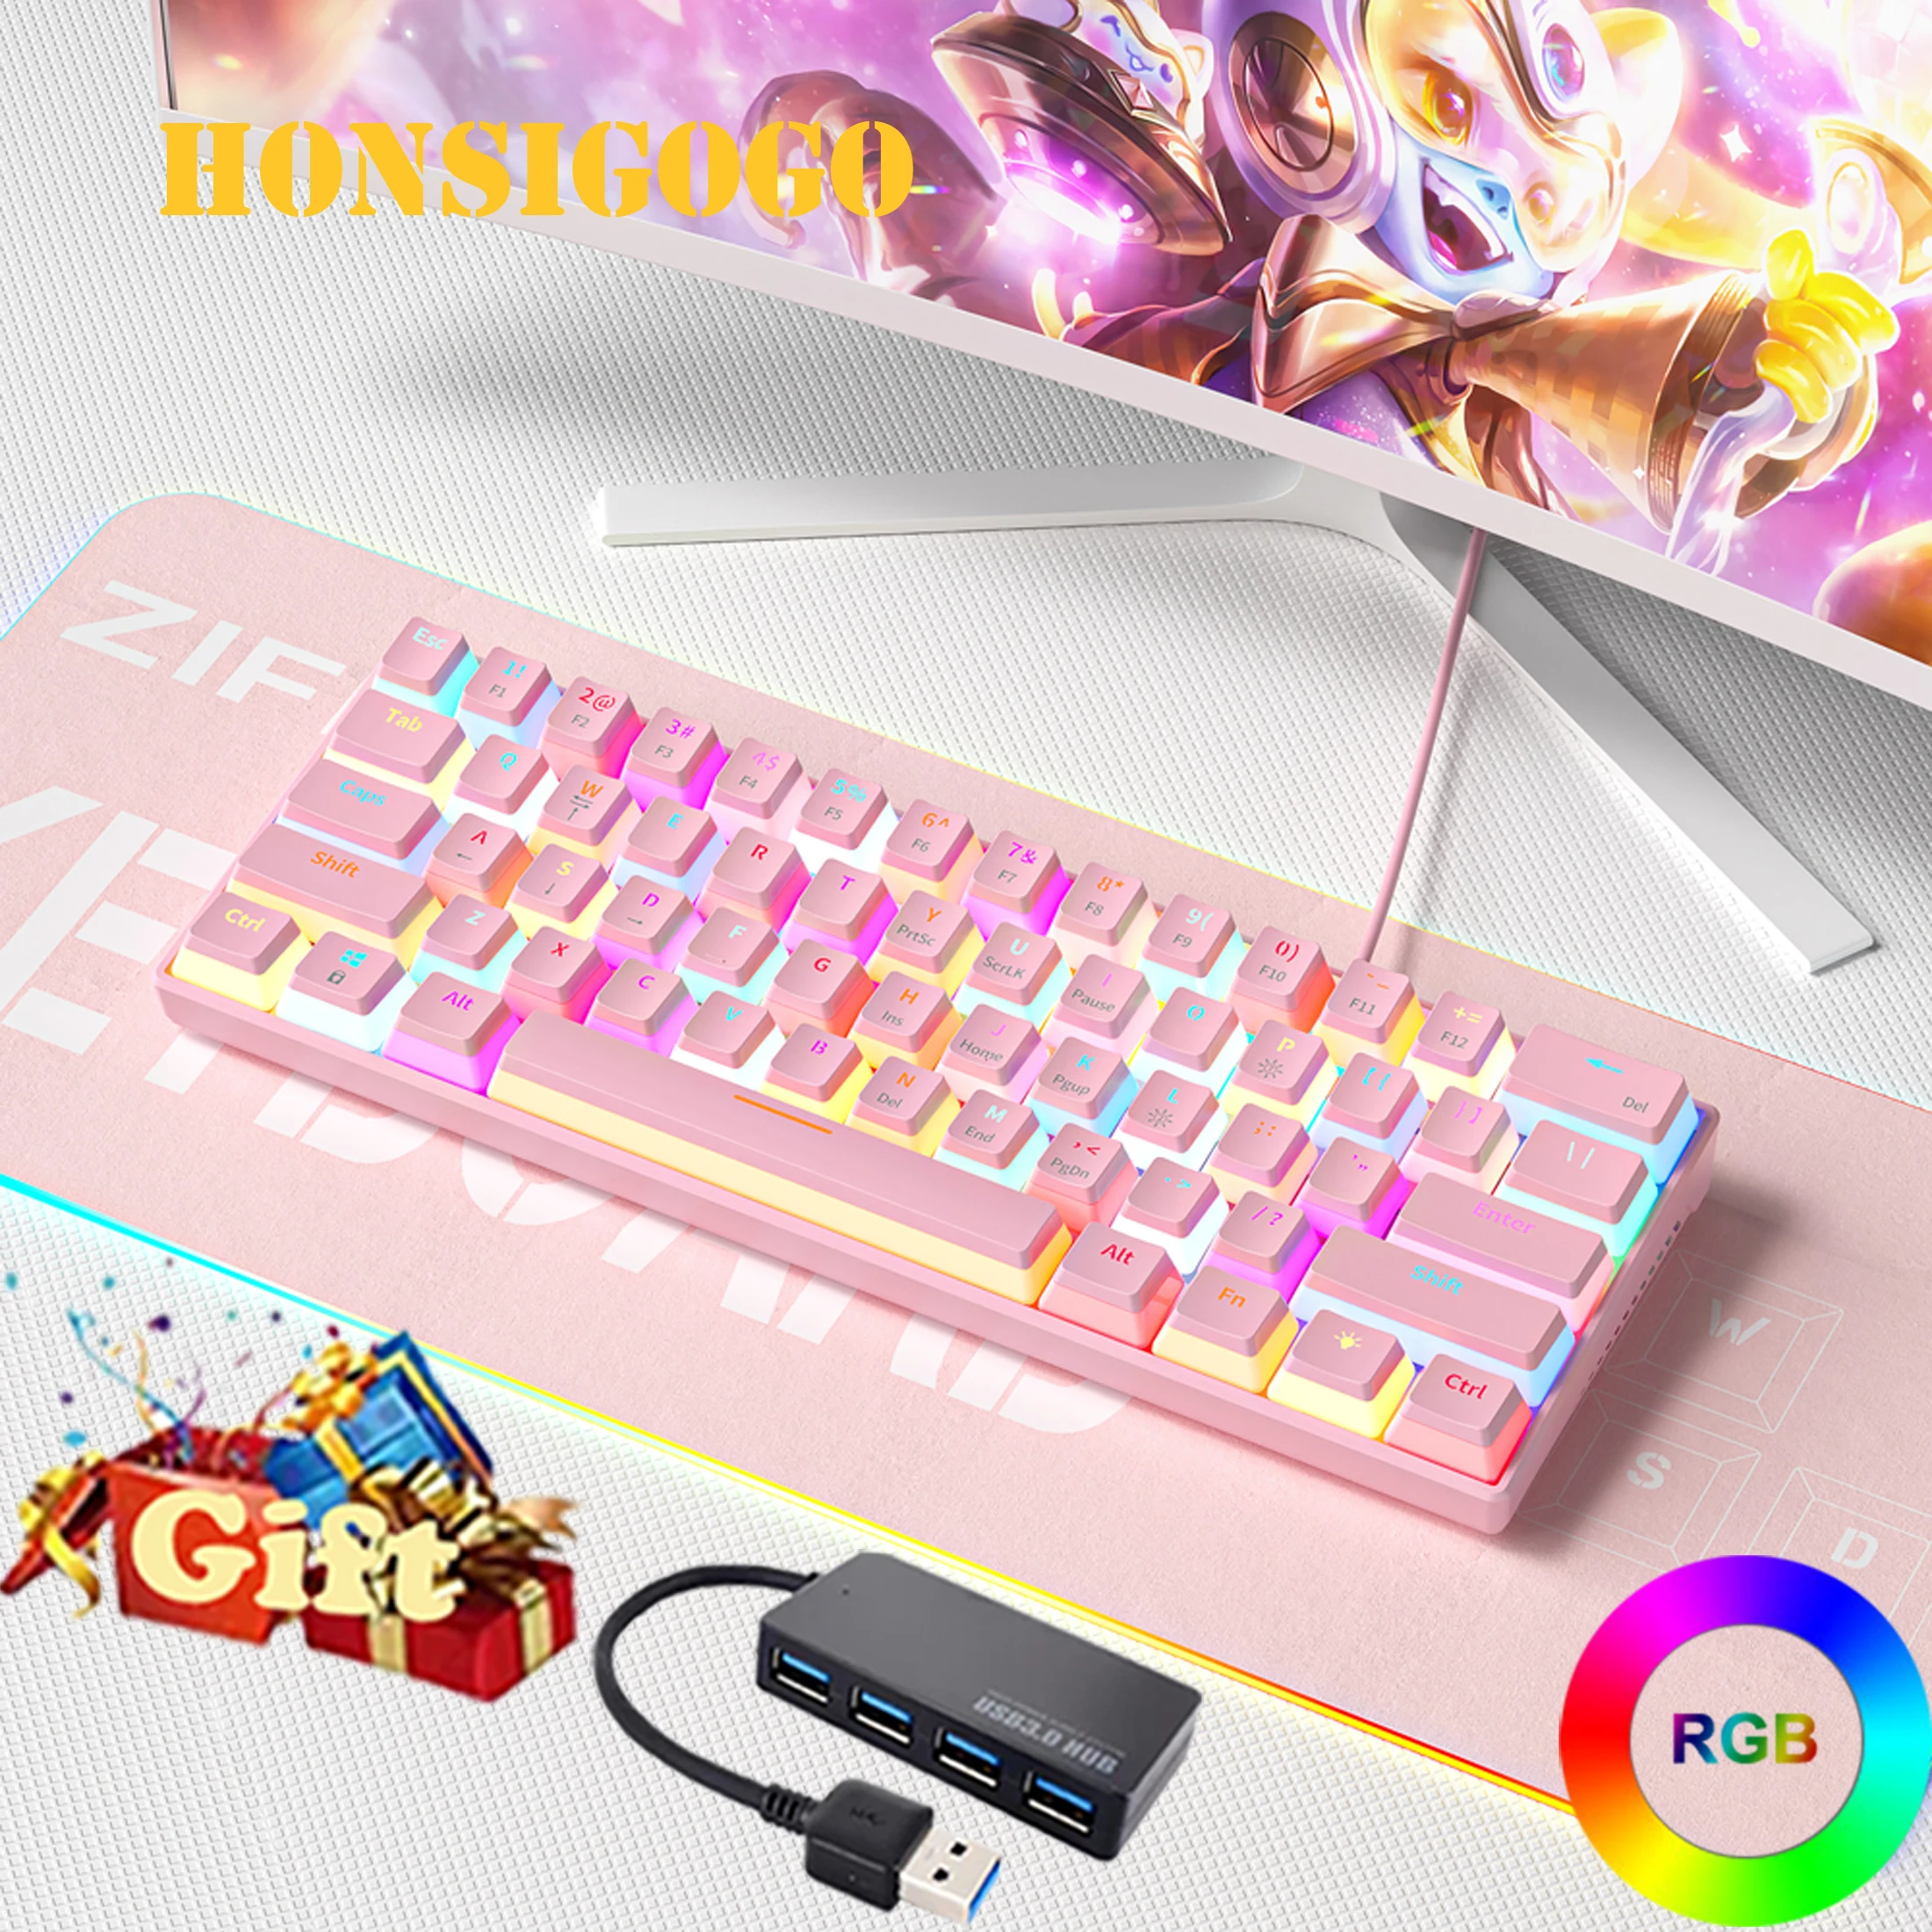 ZA616-miniteclado mecánico translúcido para jugadores, teclado con cable RGB retroiluminado para chica, color rosa, 61 teclas, Kawaii